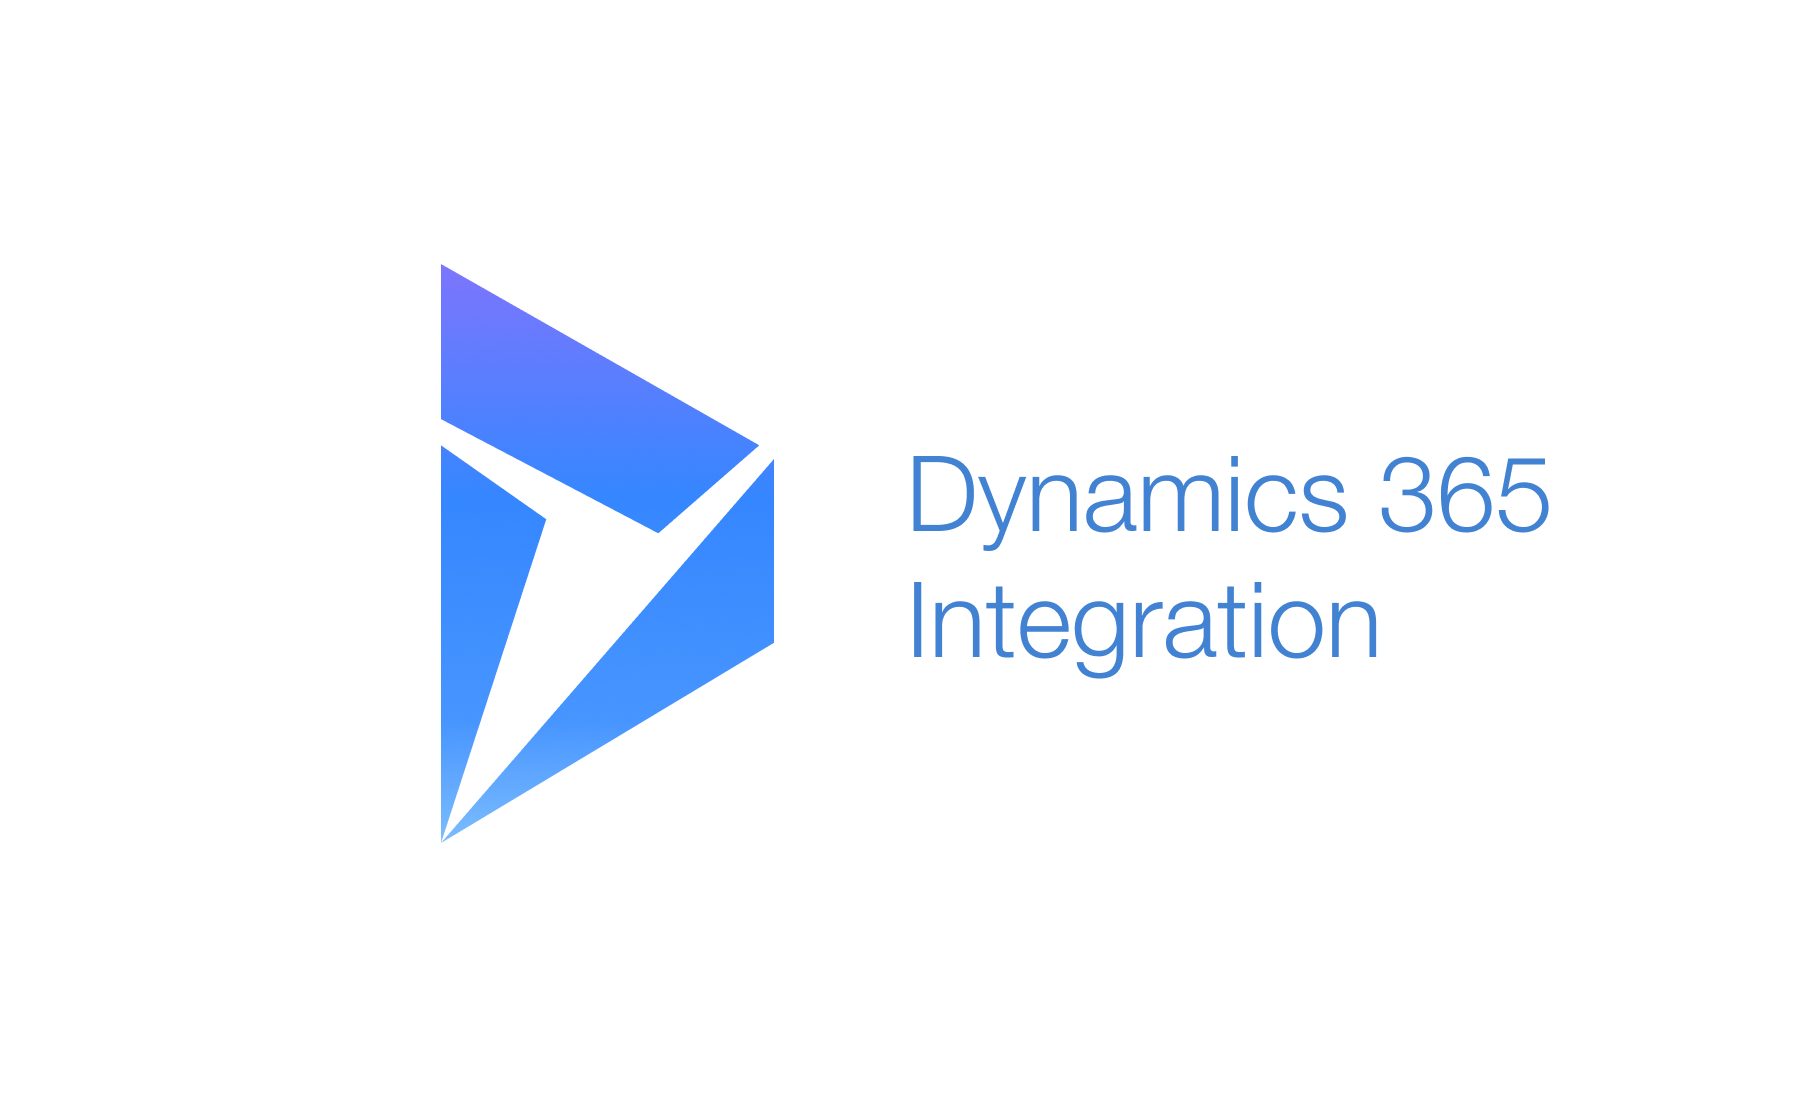 Dynamics 365 Integration